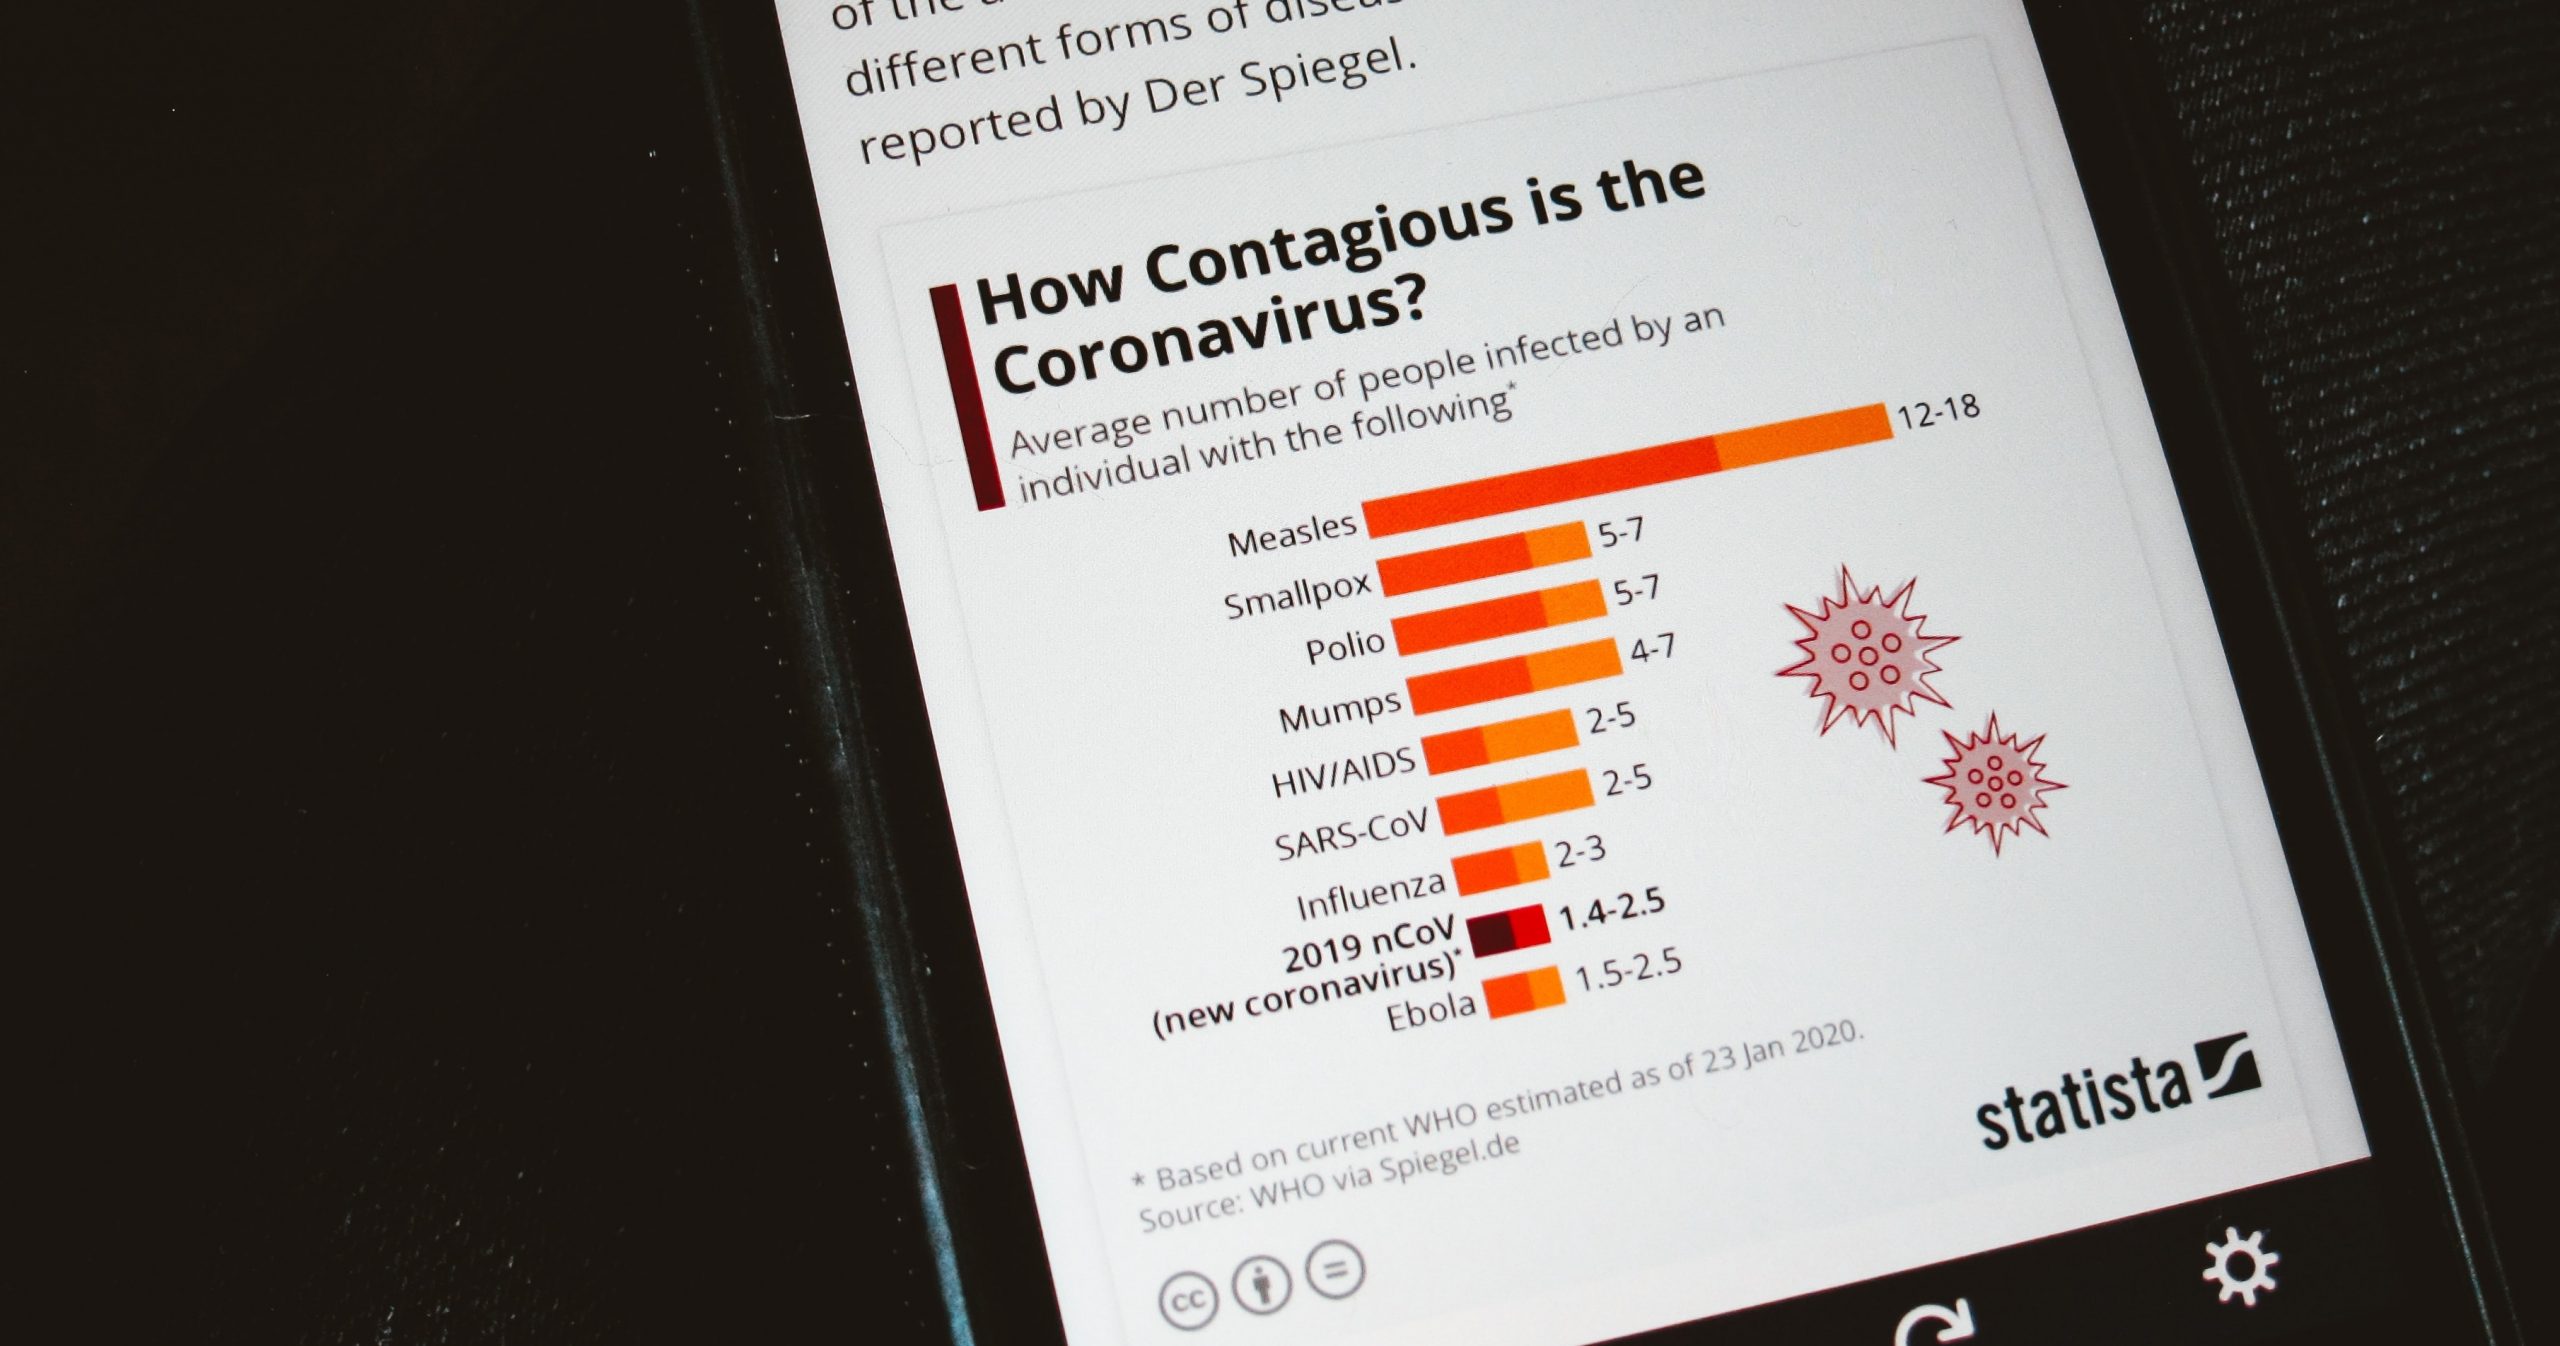 How contagious is the coronavirus